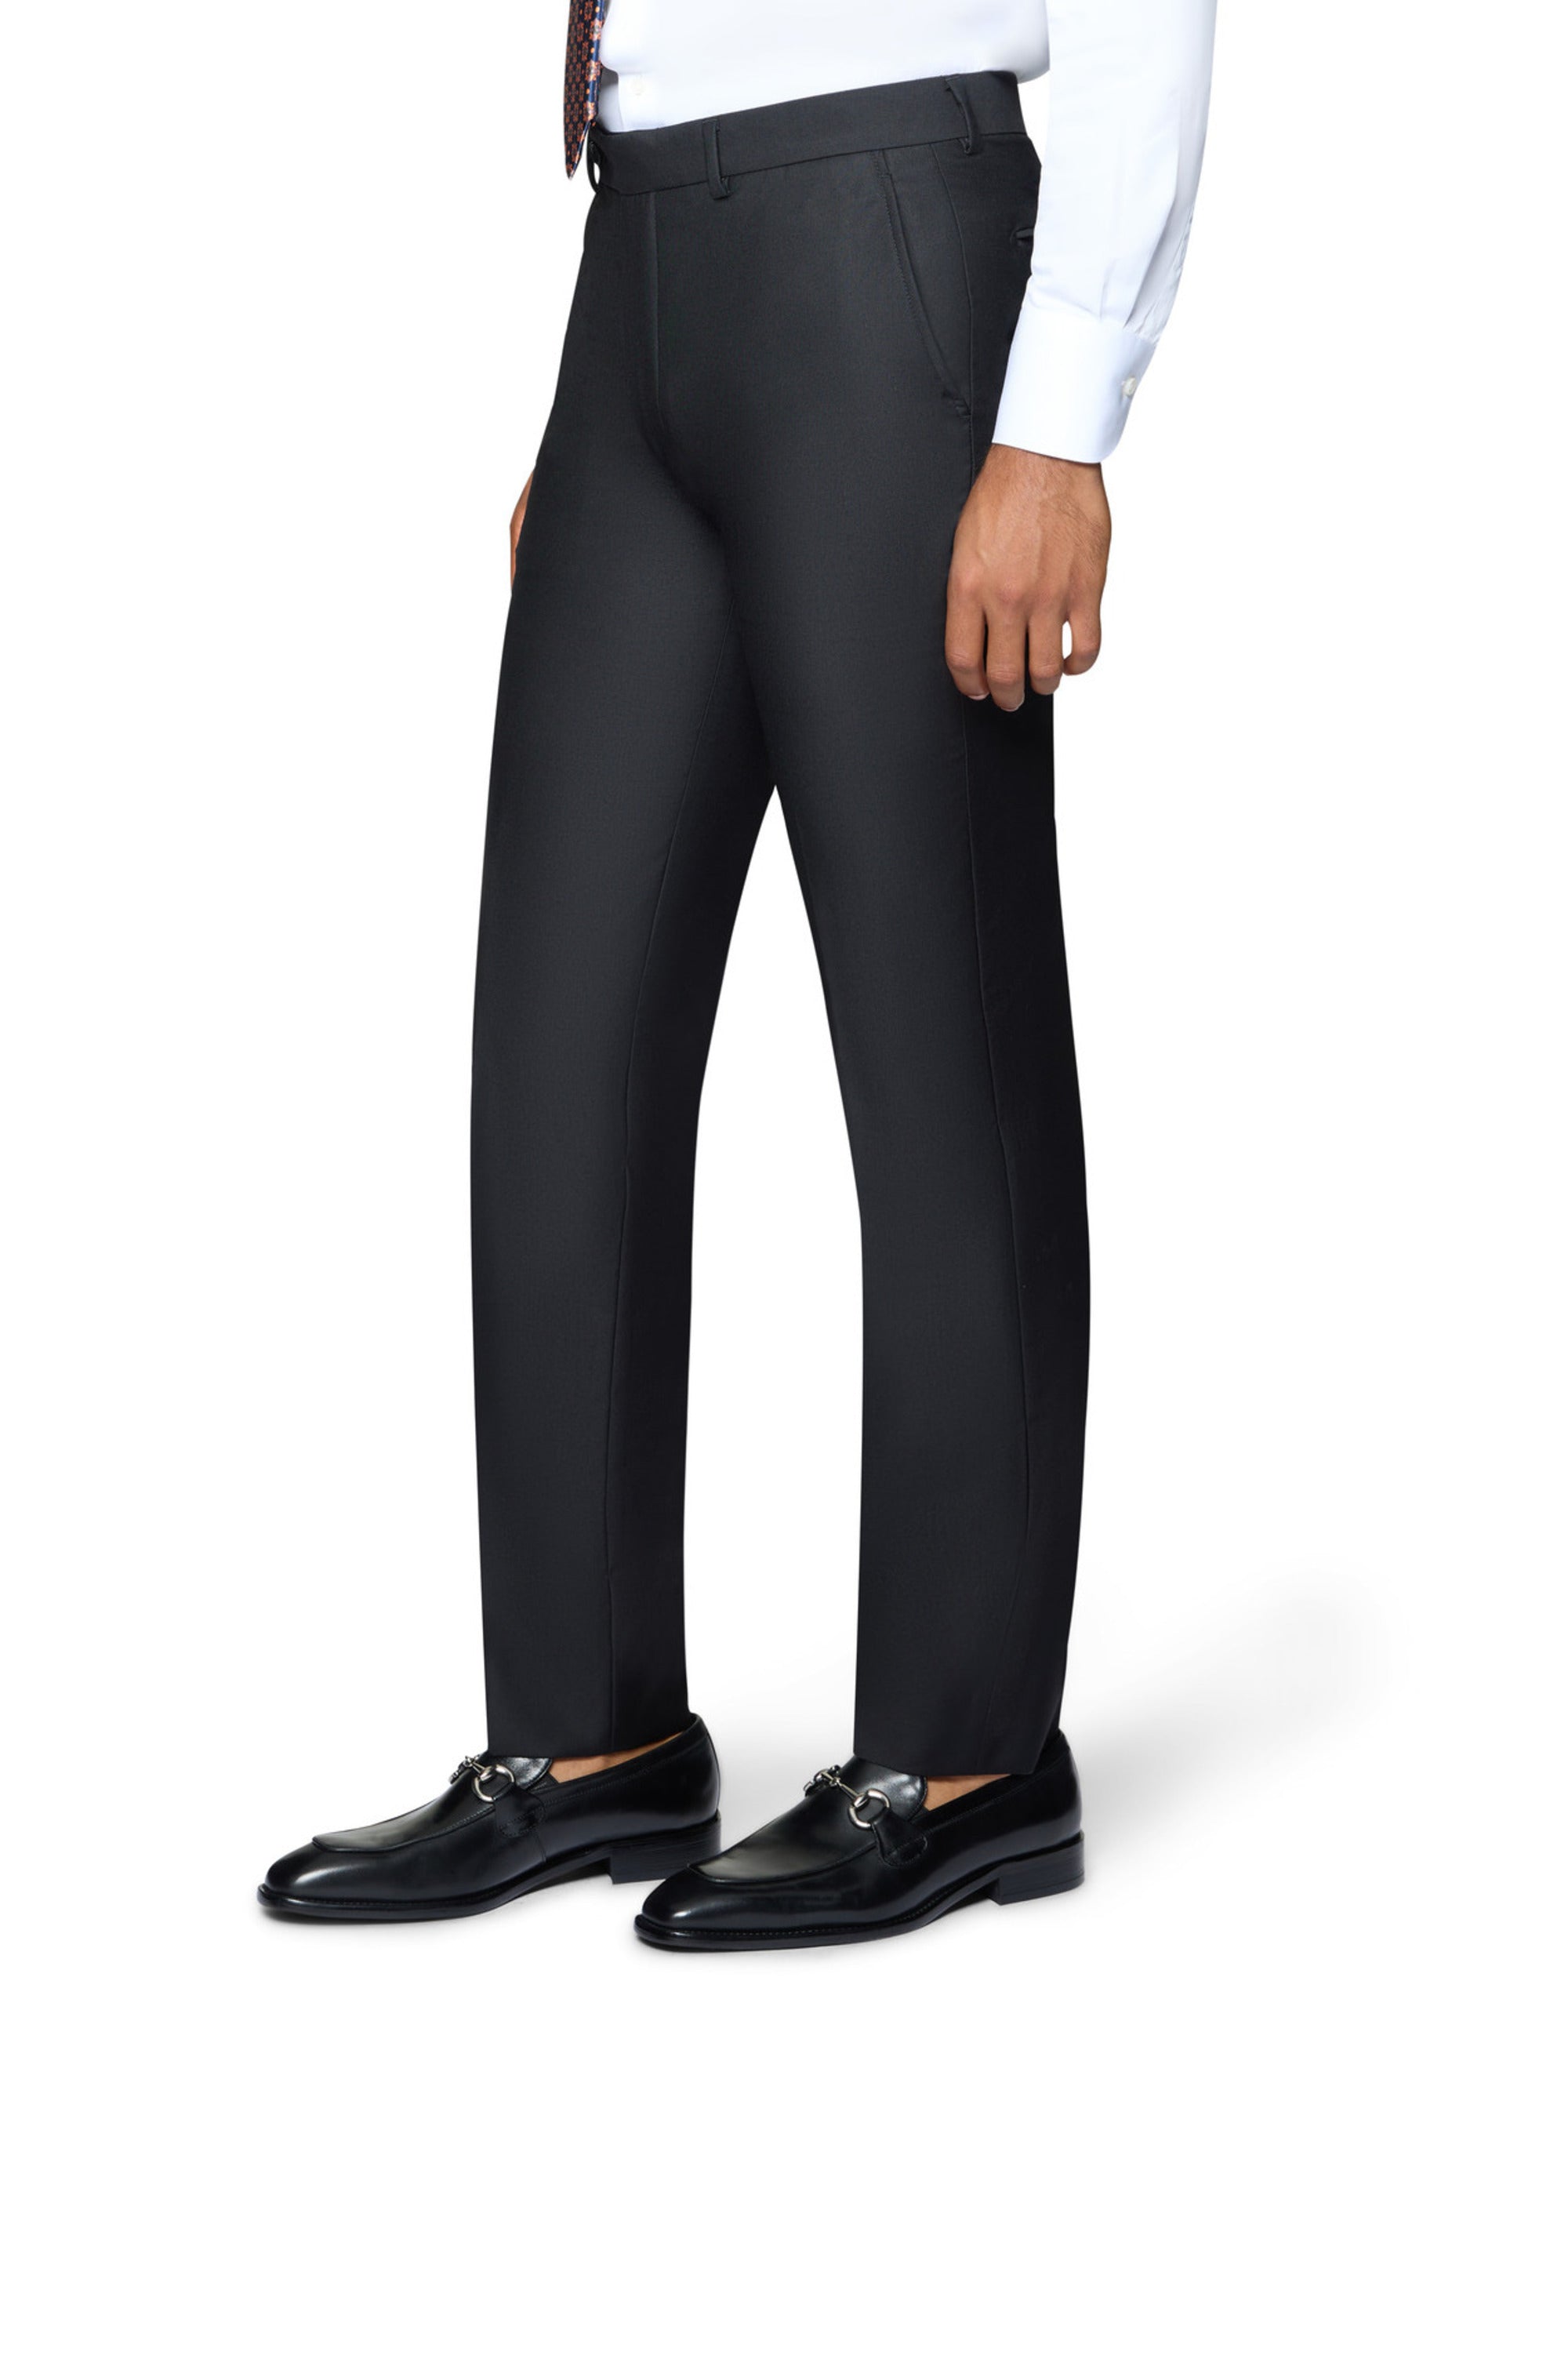 Berragamo Elegant - Faille Wool Solid Suit Modern - Black